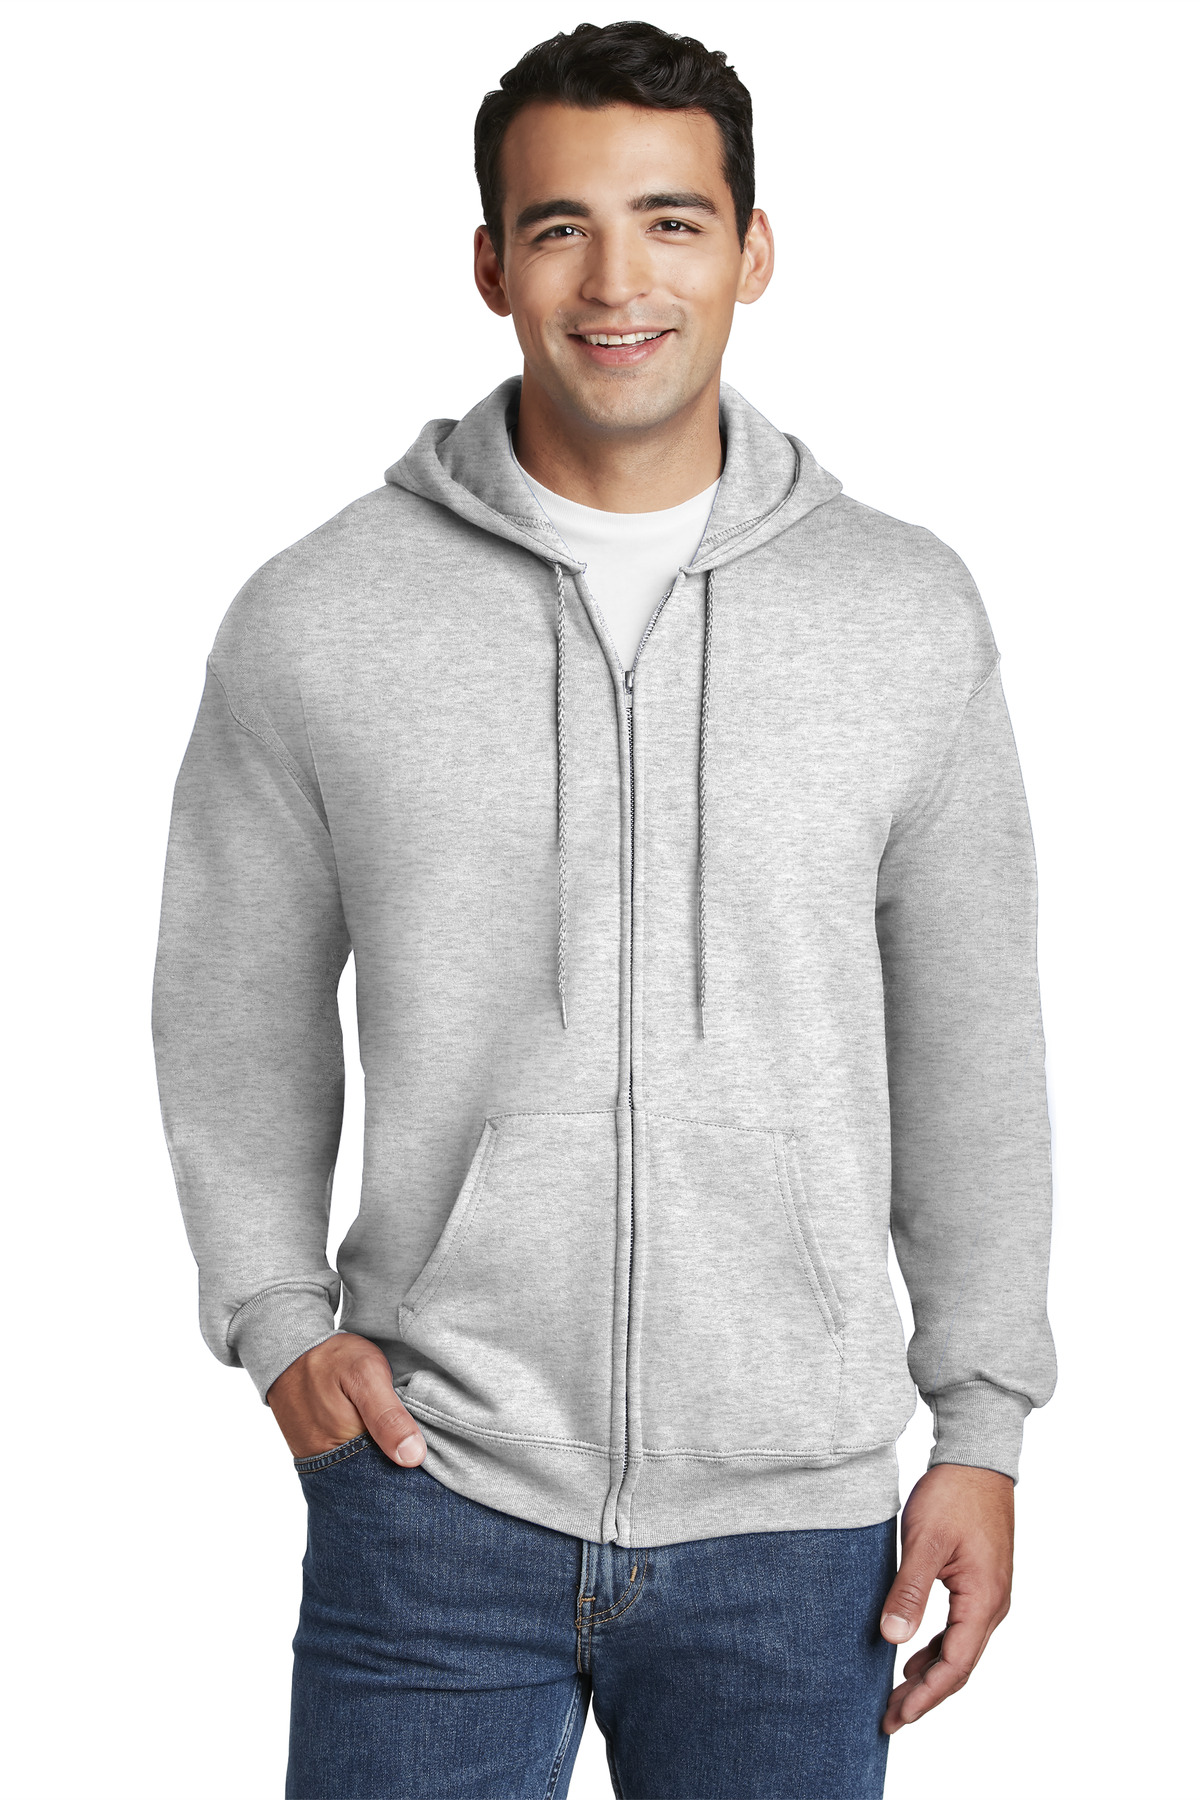 Hanes Ultimate Cotton - Full-Zip Hooded Sweatshirt....